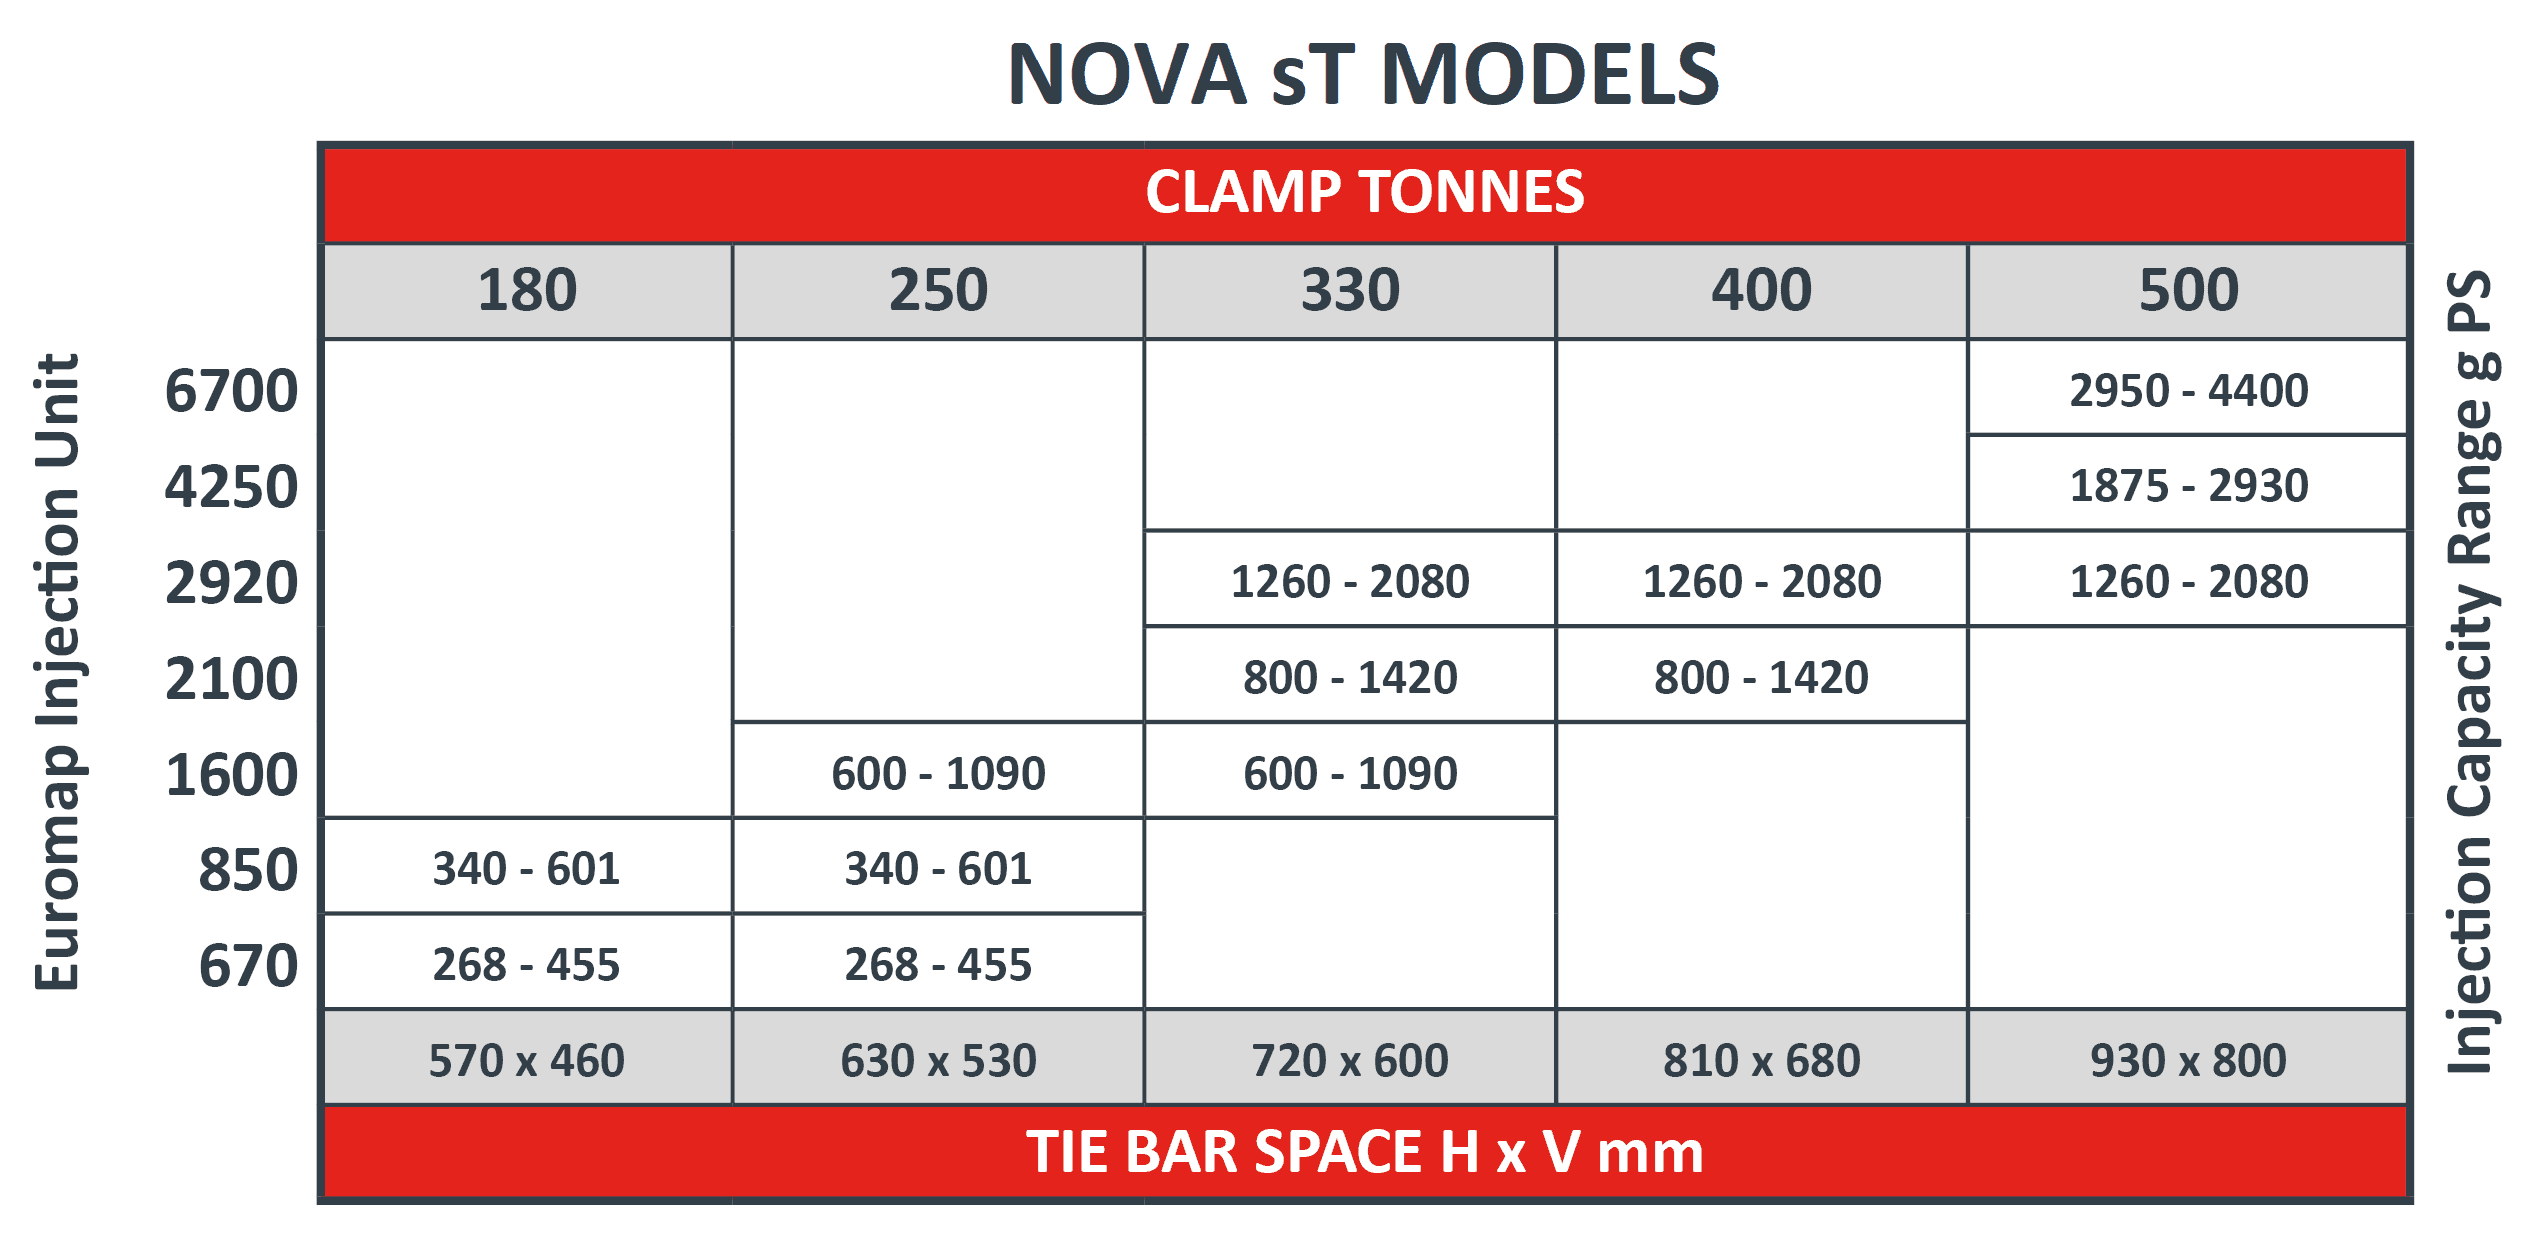 NOVA sT Servo Hydraulic Injection Moulding Machine model specification sheet